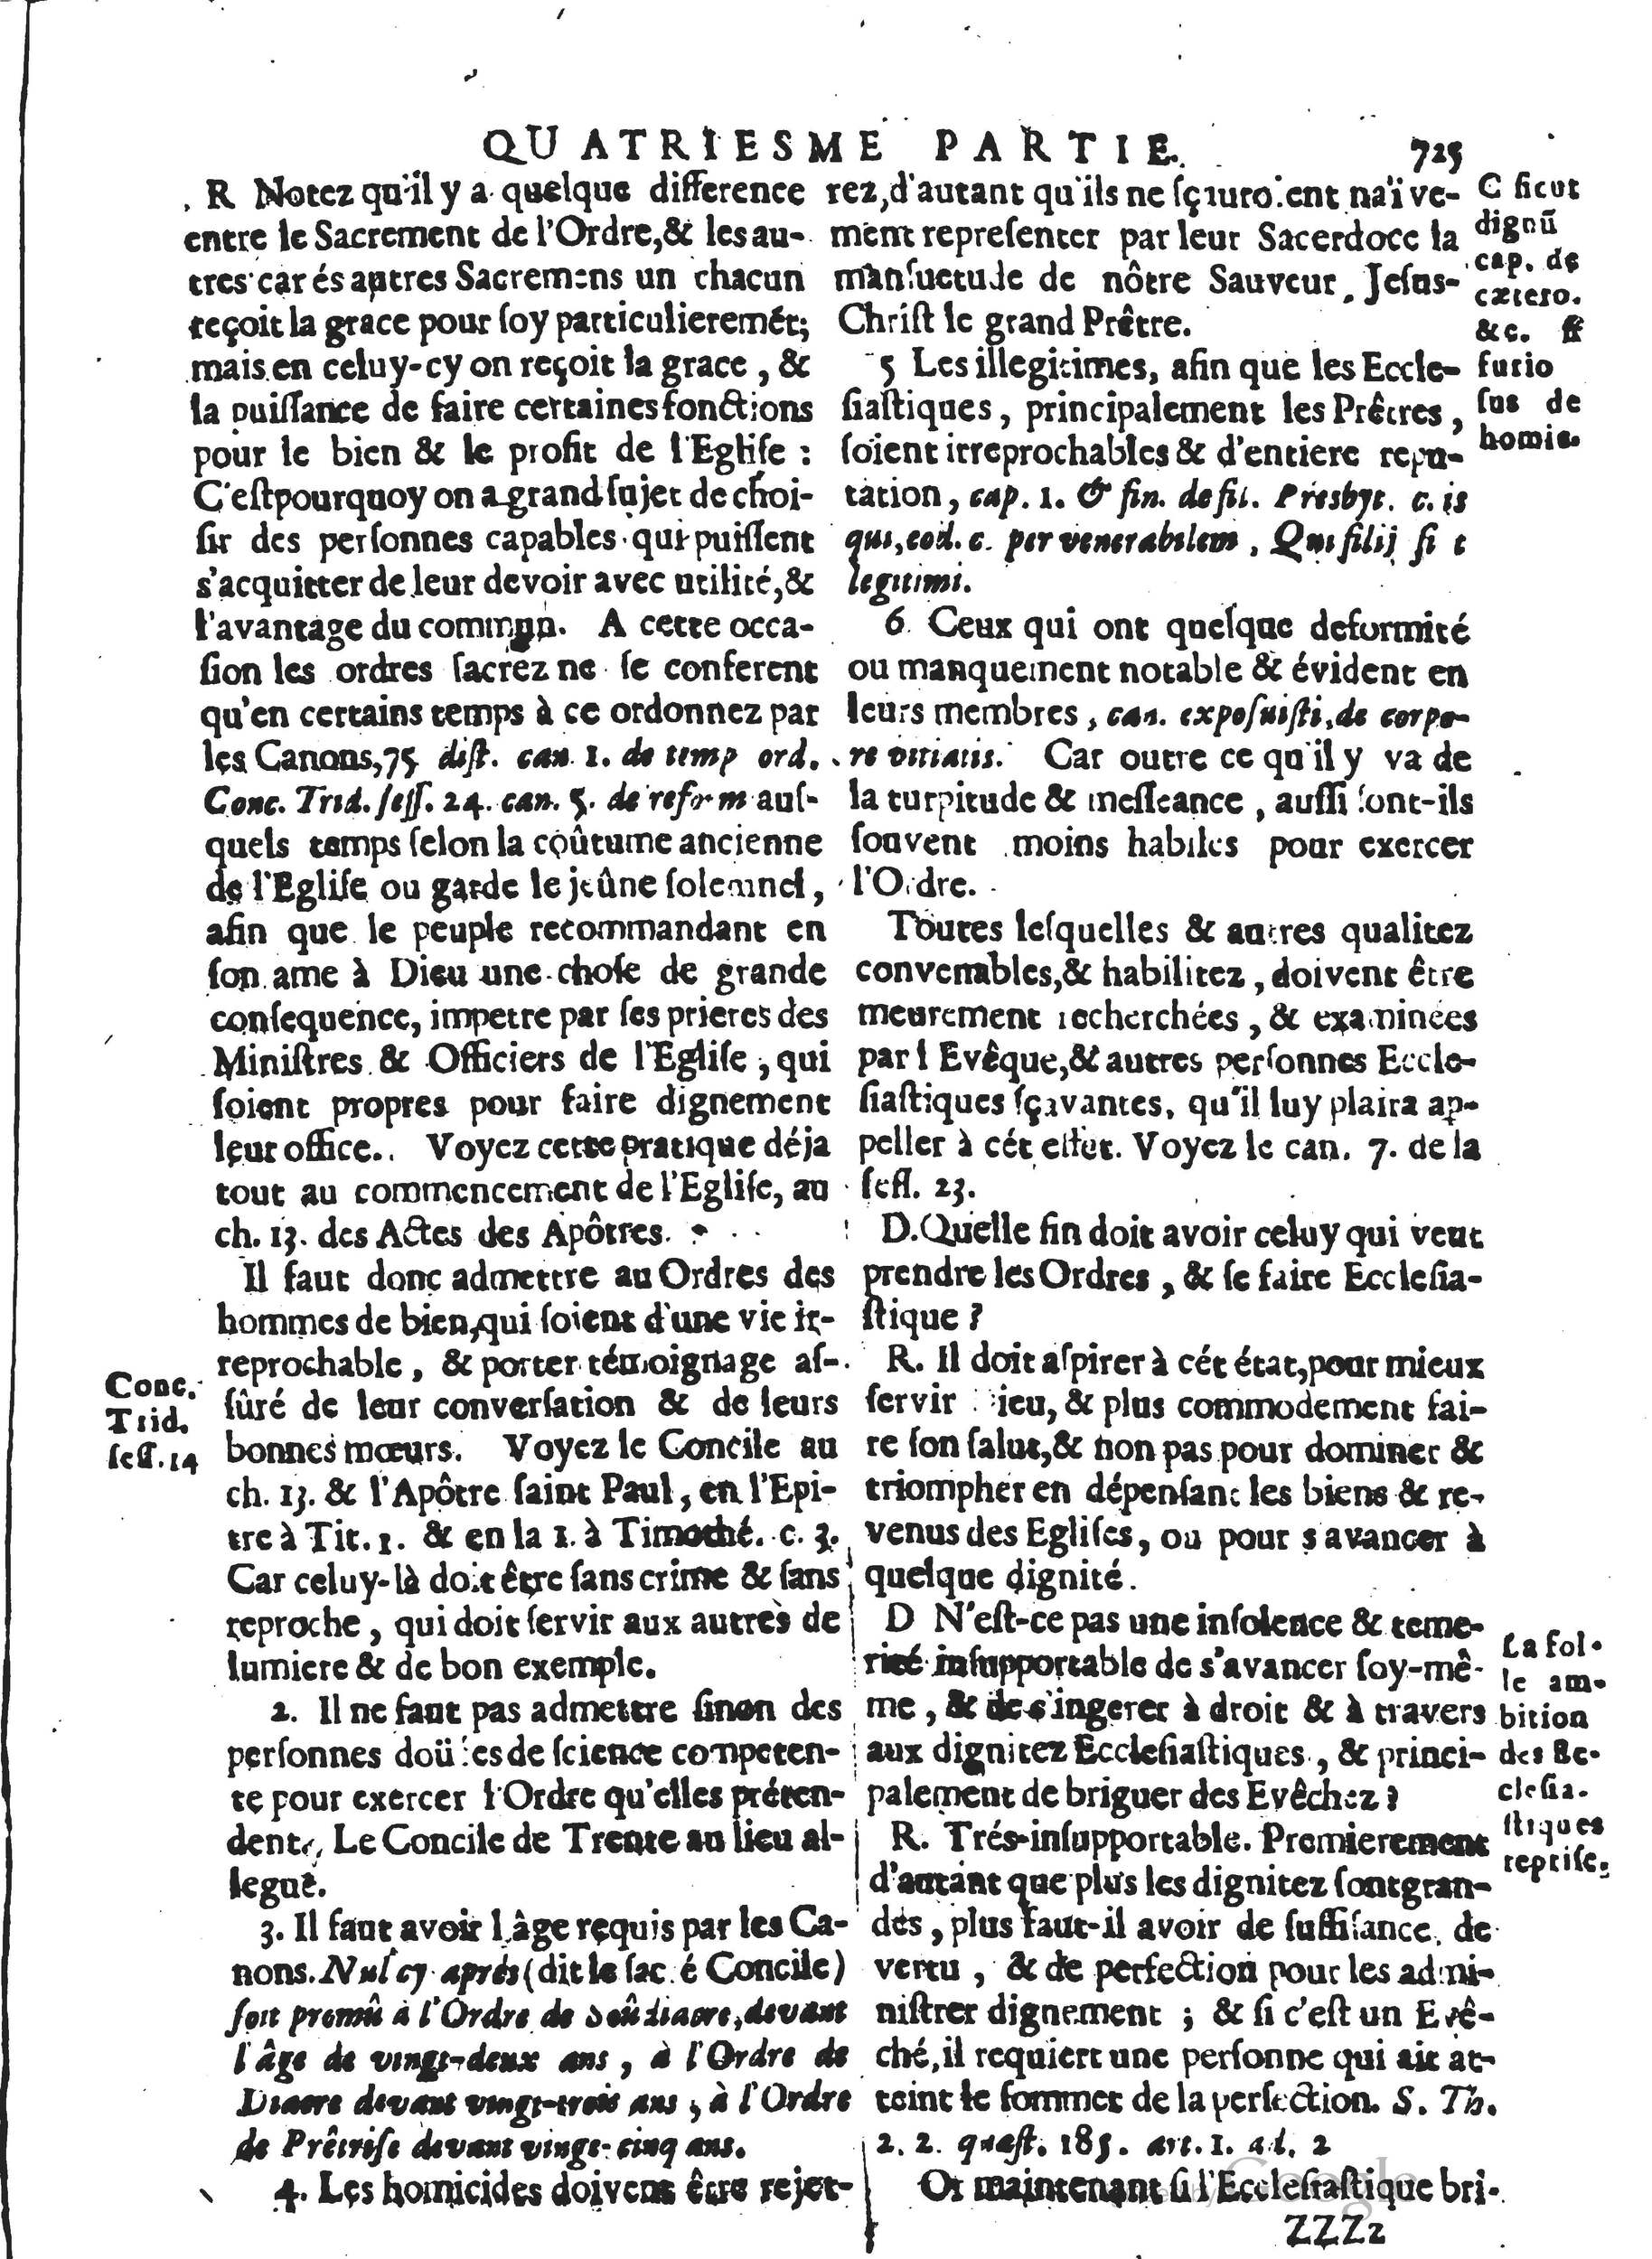 1595 Jean Besongne Vrai Trésor de la doctrine chrétienne BM Lyon_Page_733.jpg